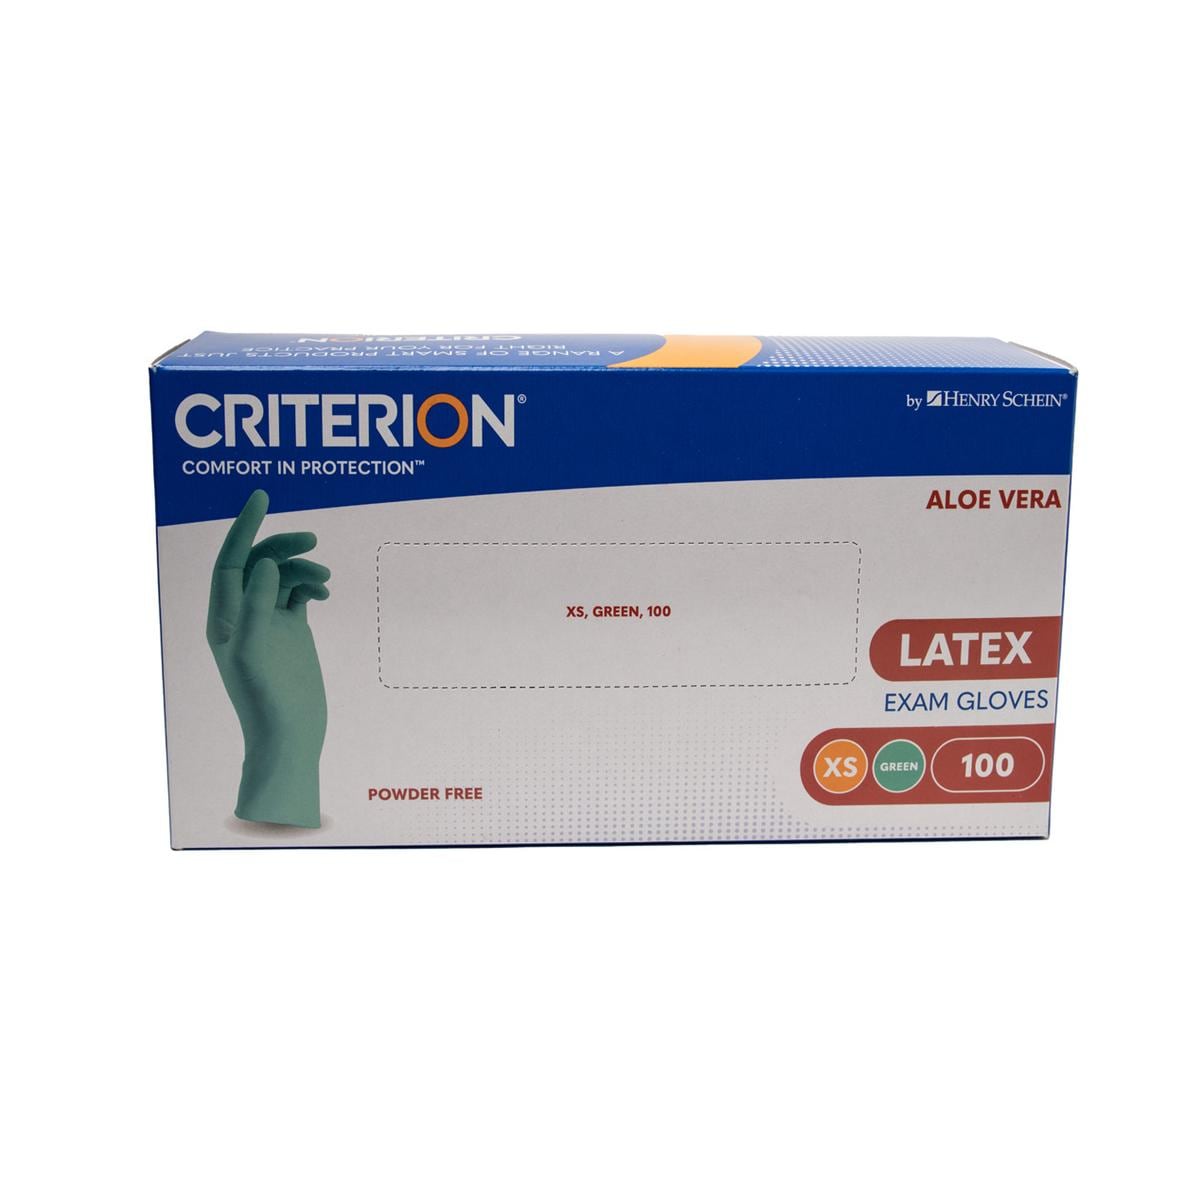 HS-Aloe Latex Handschuhe puderfrei Criterion® - Größe XS, Packung 100 Stück